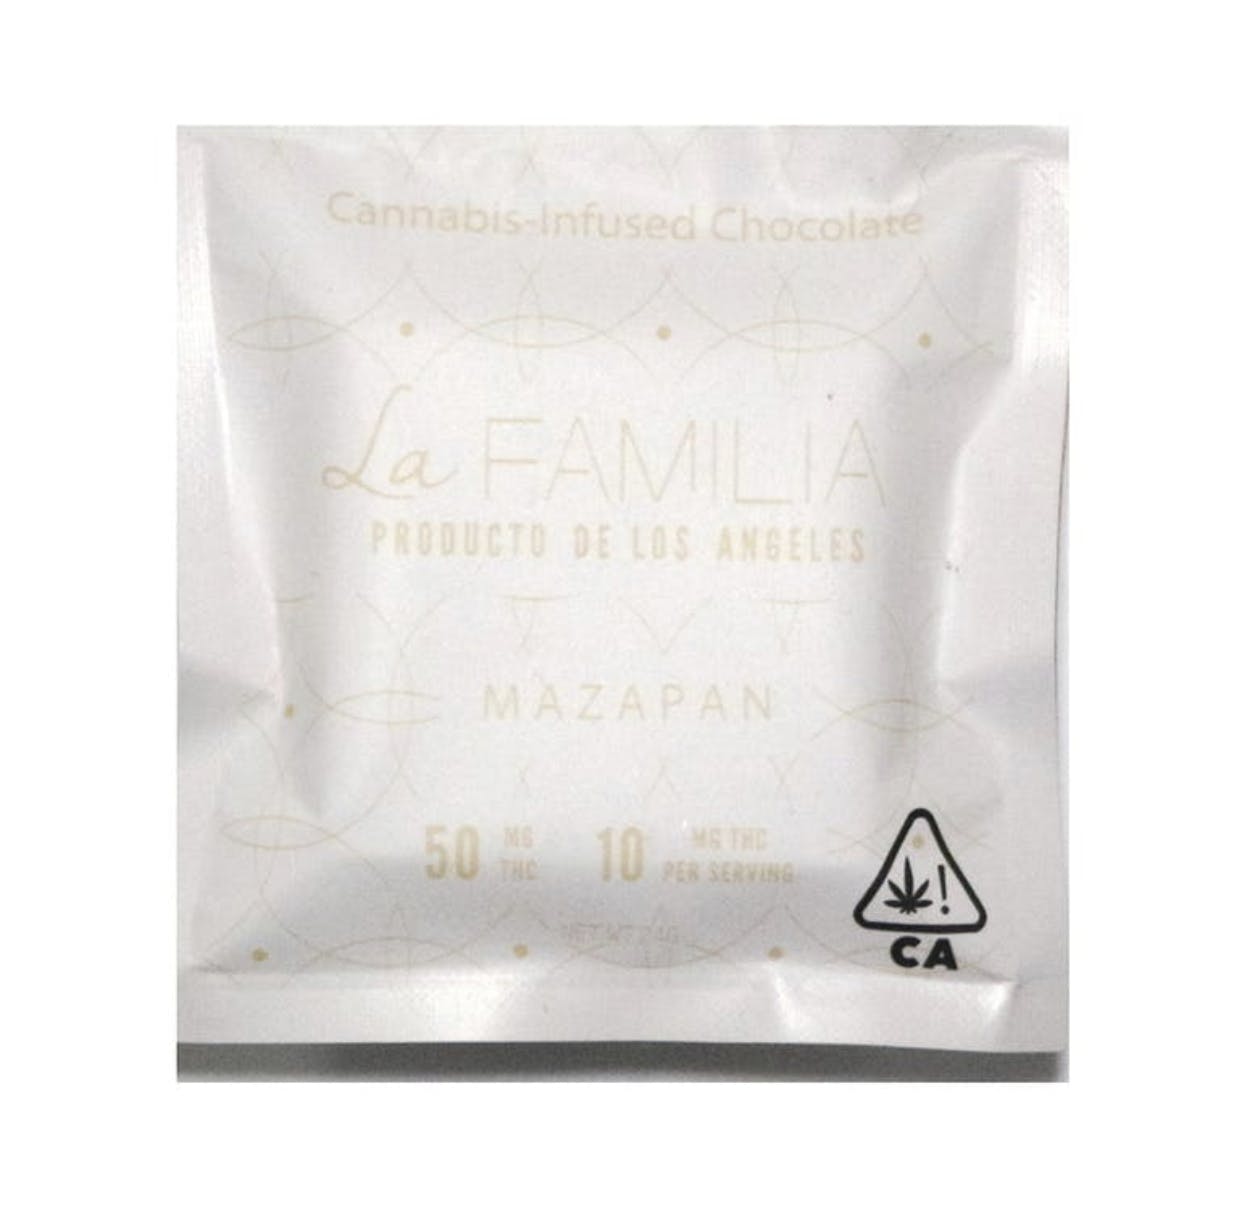 edible-la-familia-chocolate-2c-mazapan-50mg